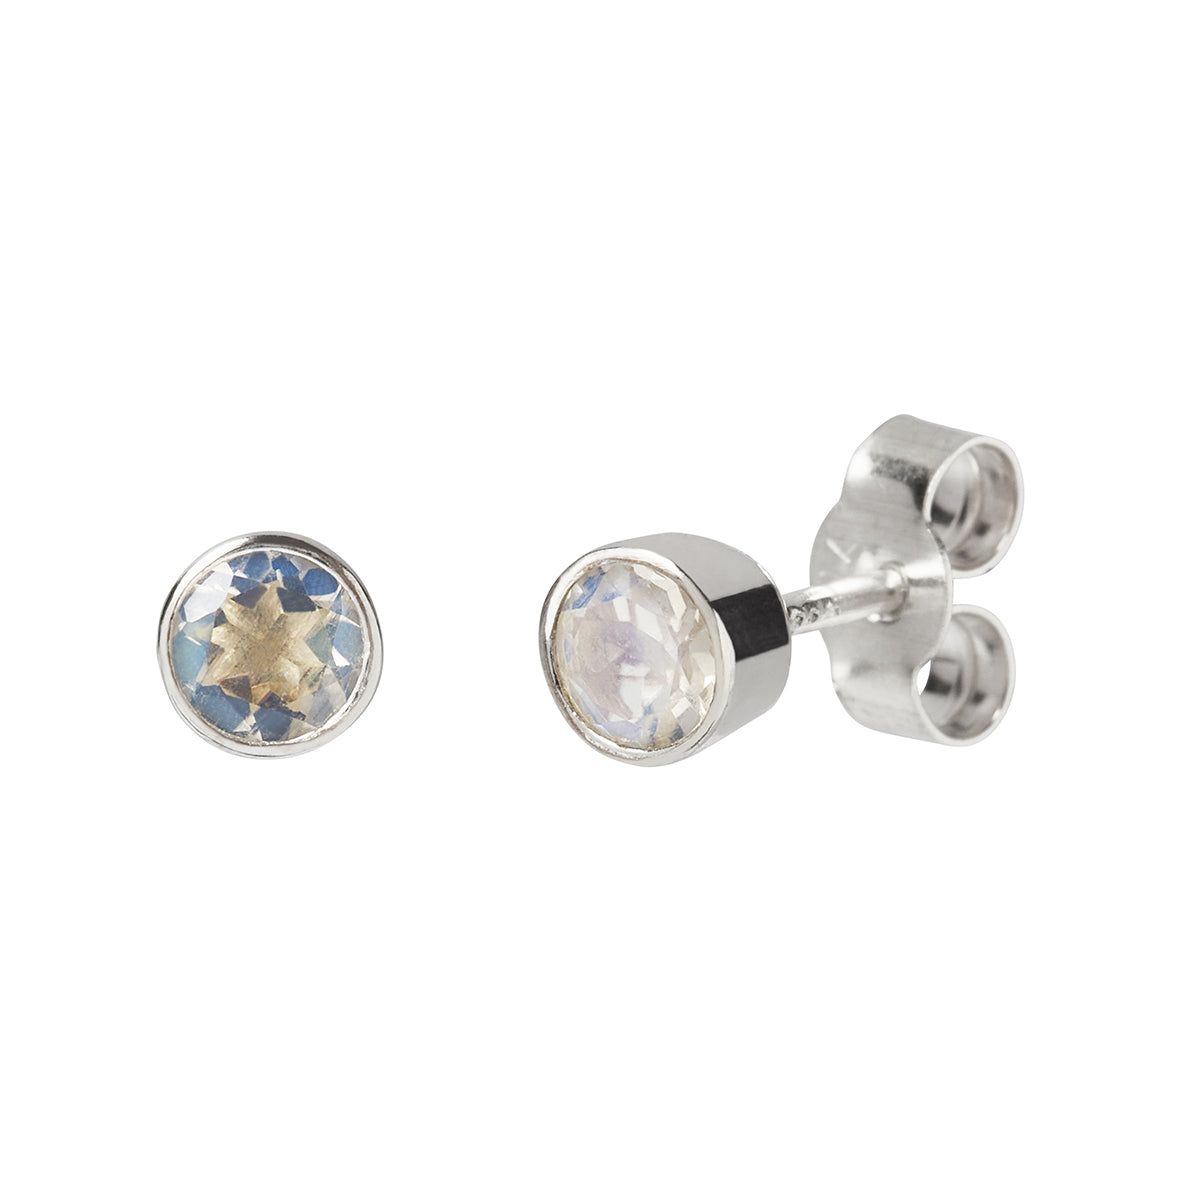 Moonstone and Silver Stud Earrings